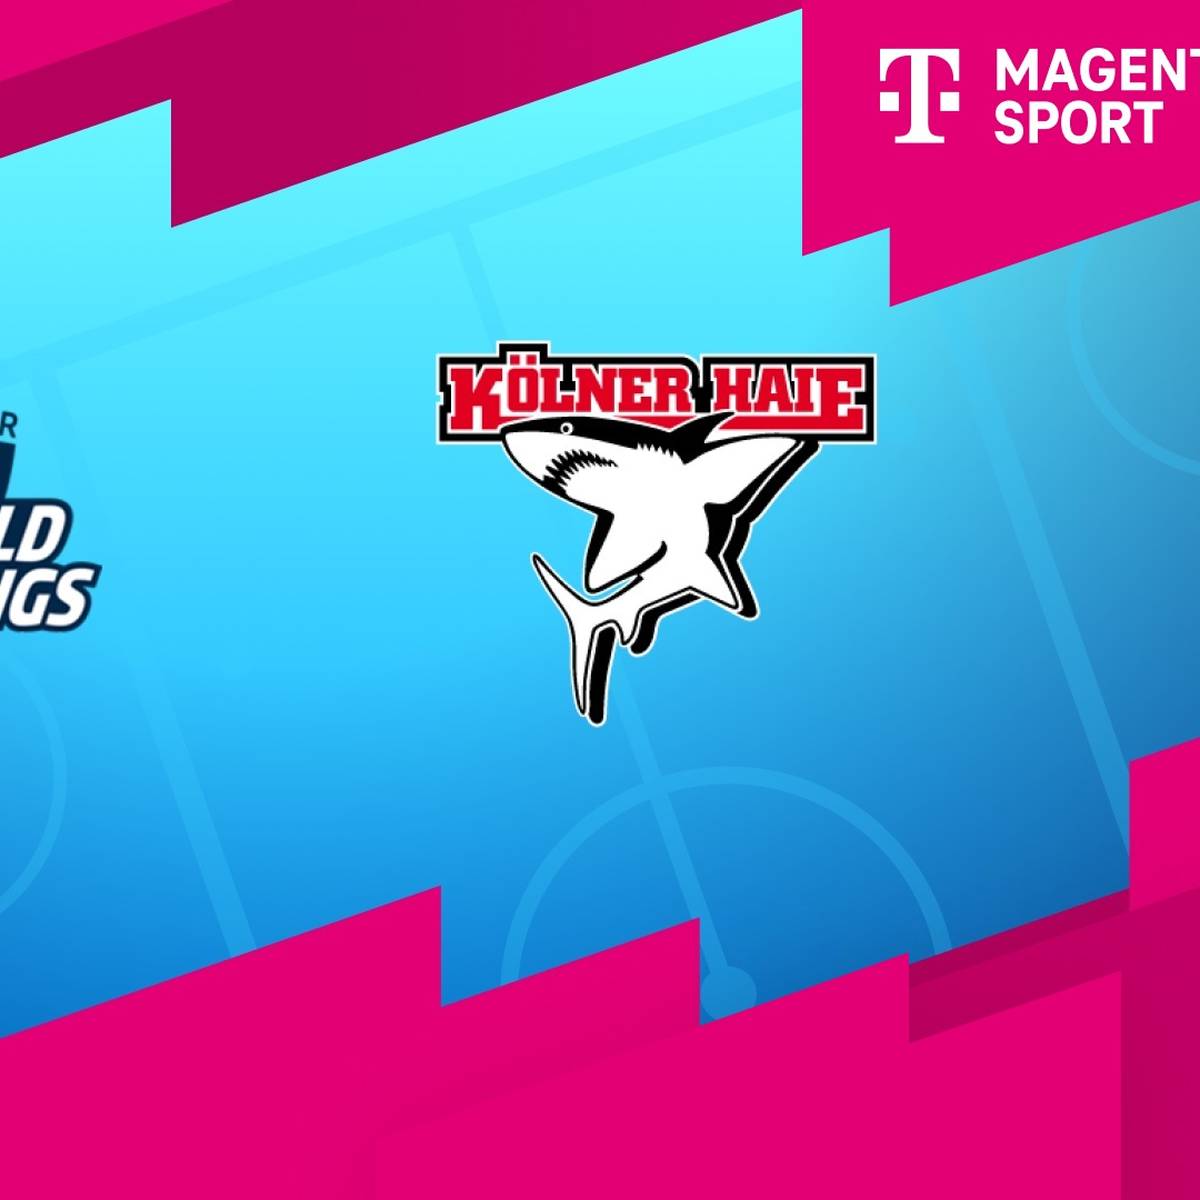 Schwenninger Wild Wings - Kölner Haie (Highlights)